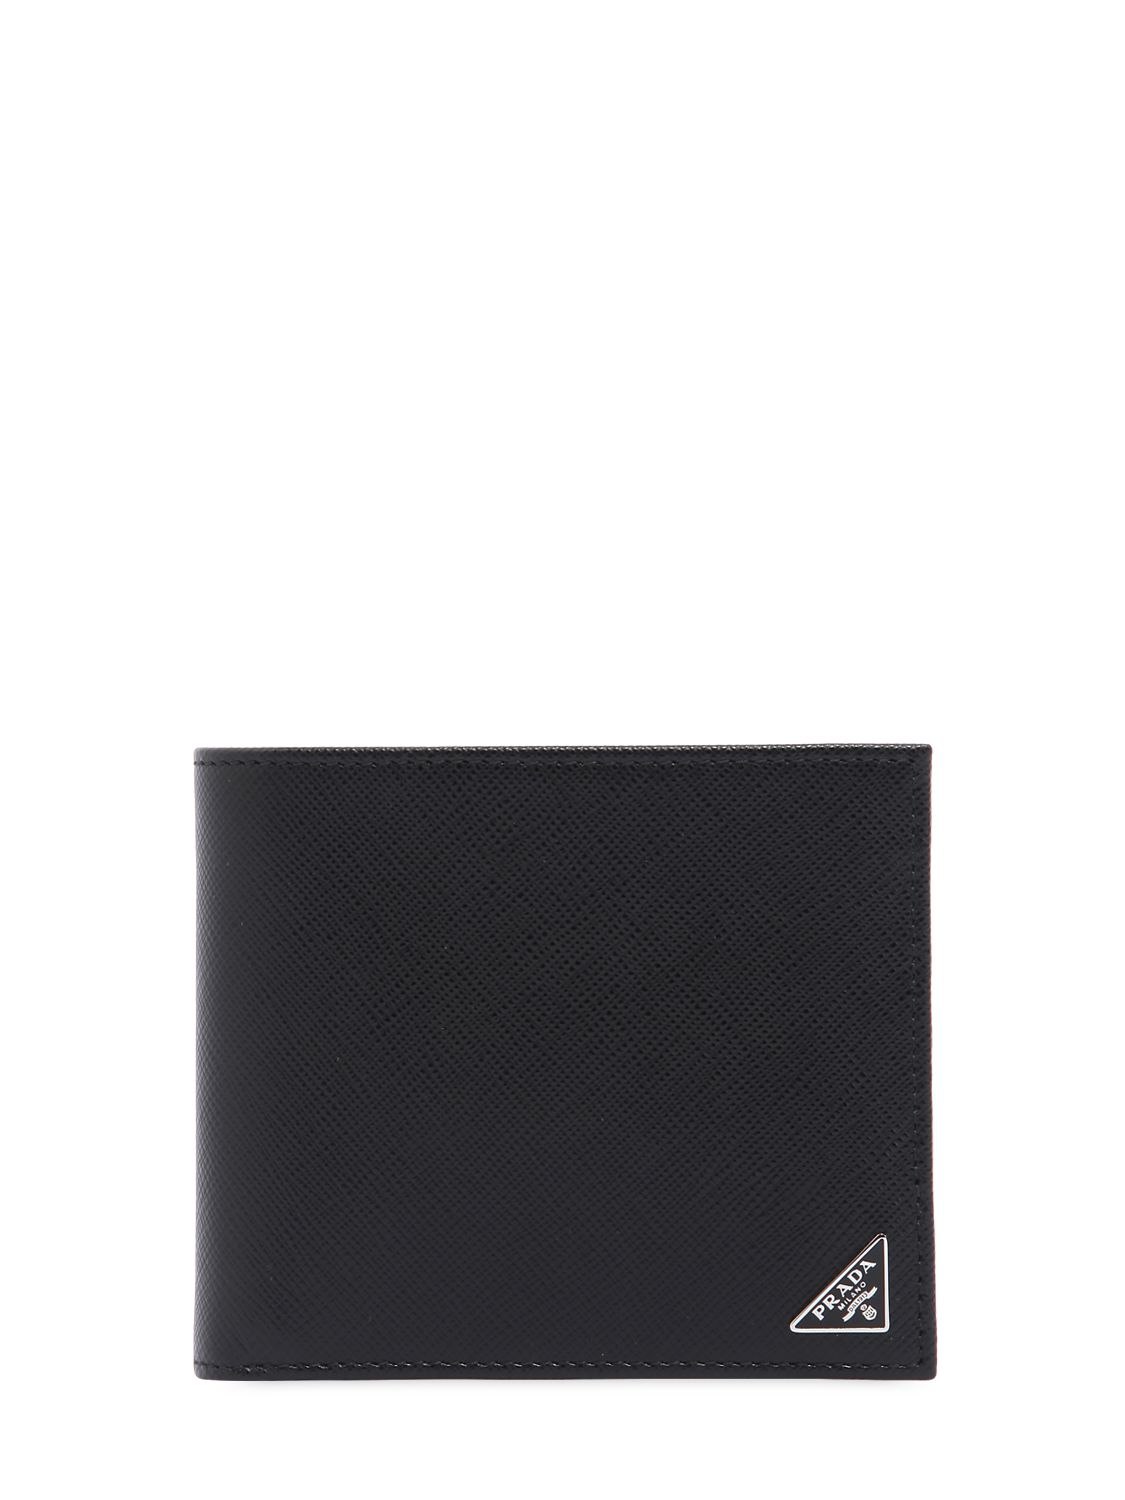 Saffiano Leather Classic Wallet | The Fashionisto